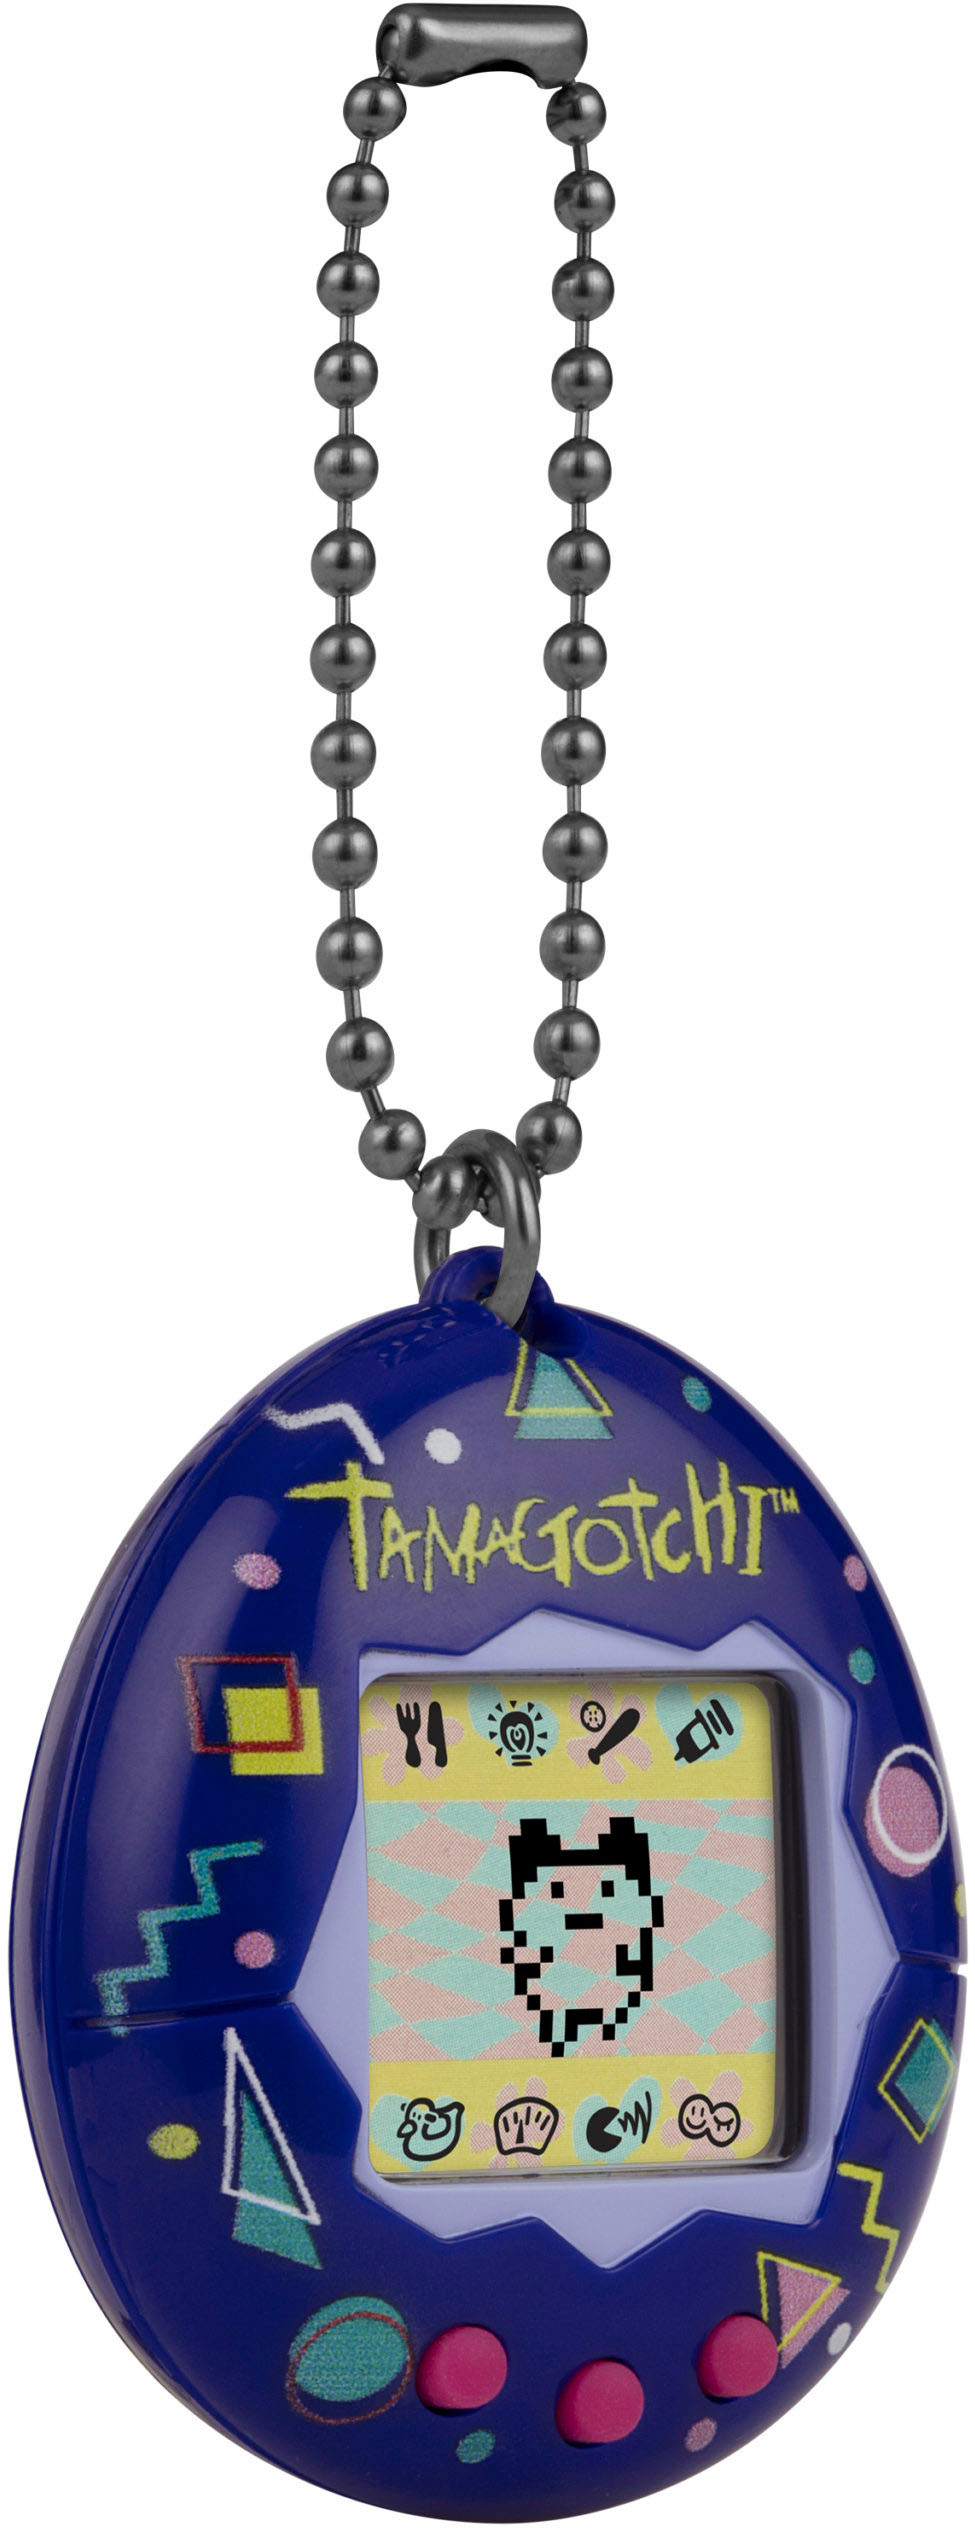 Tamagotchi Original 90s Theme 42940 - Best Buy